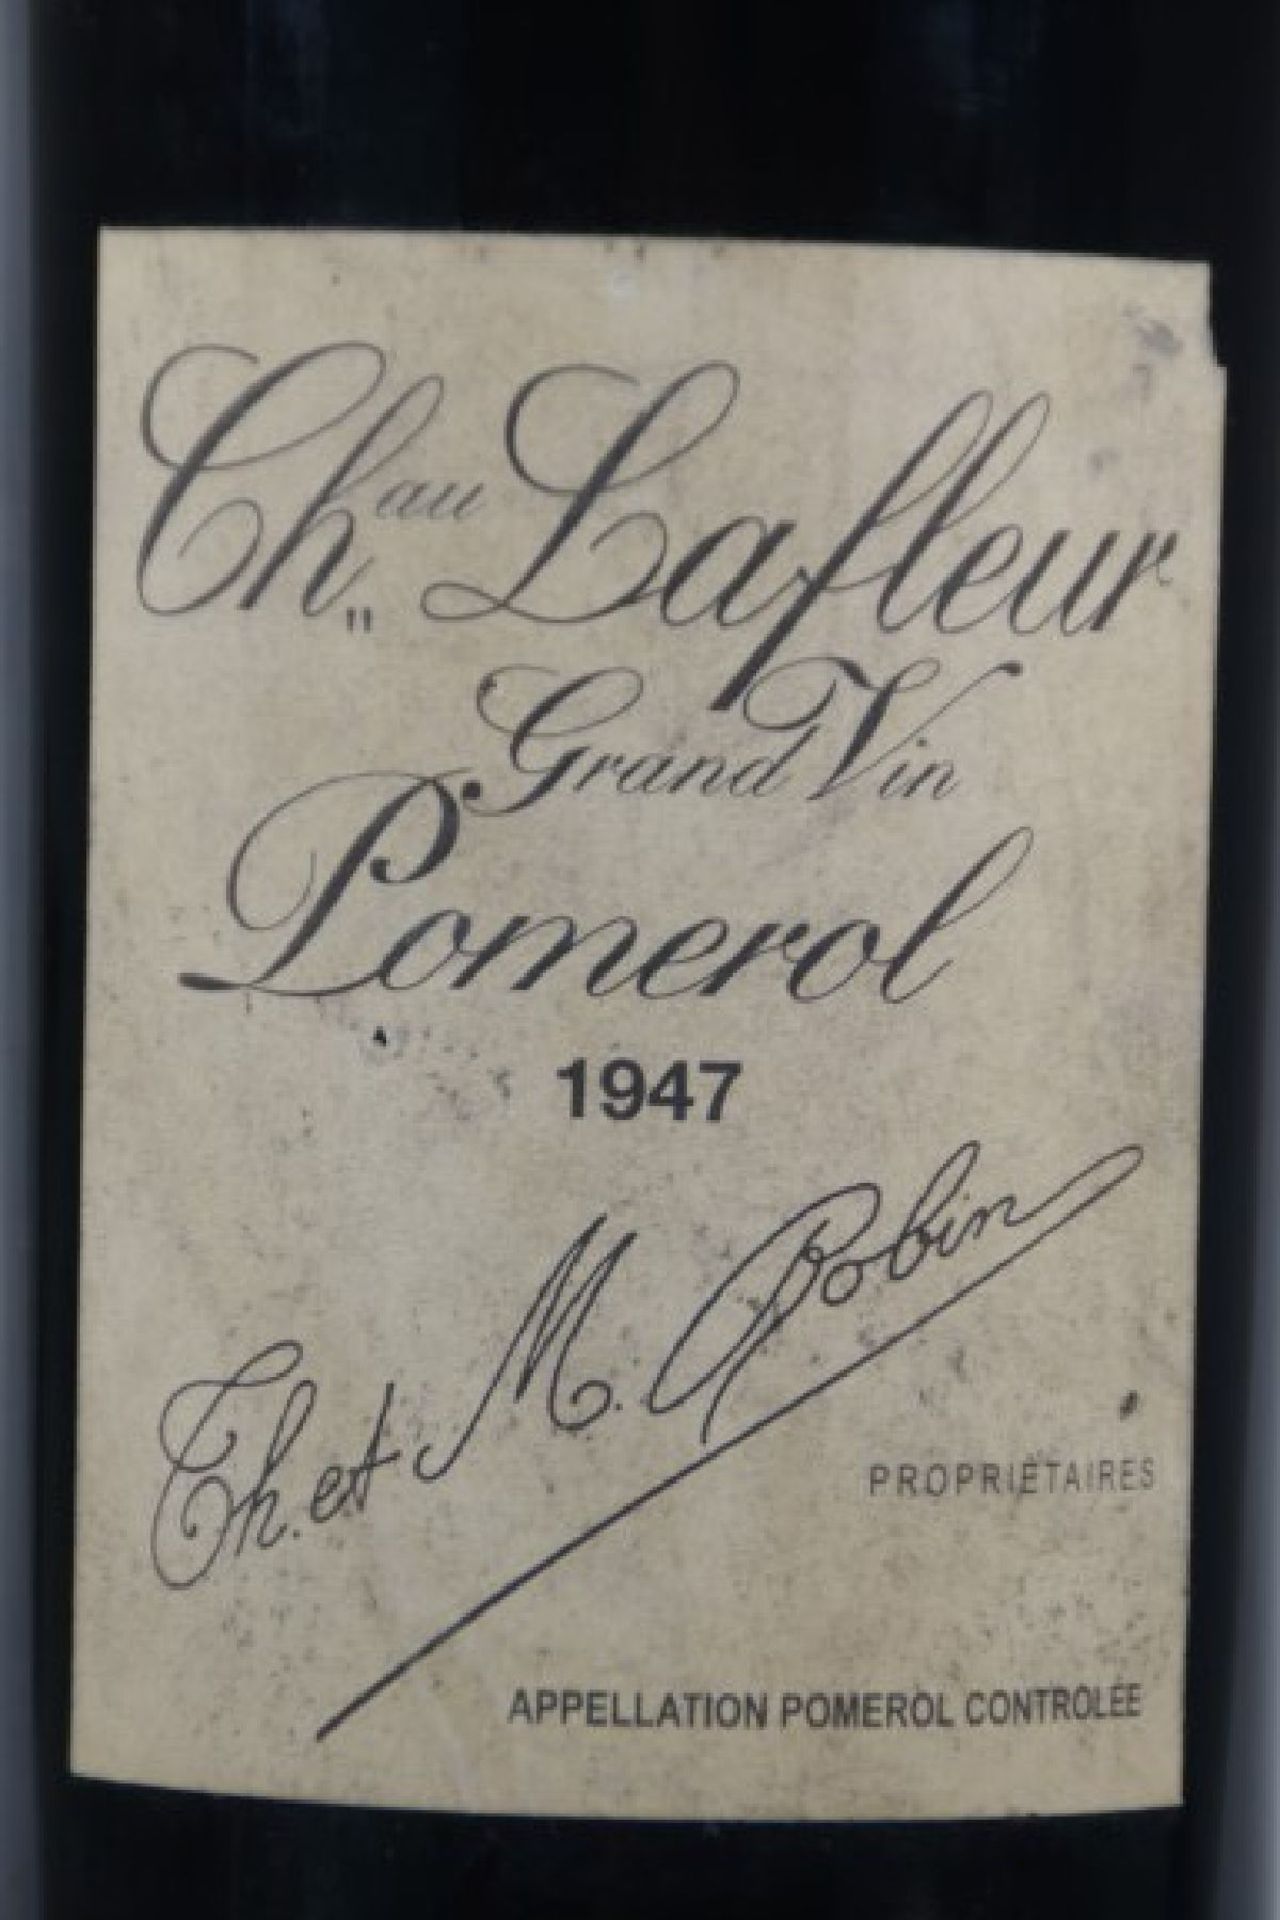 1 Magnumflasche, Chateau Lafleur Grand Vin Pomerol, 1947, - Image 2 of 4